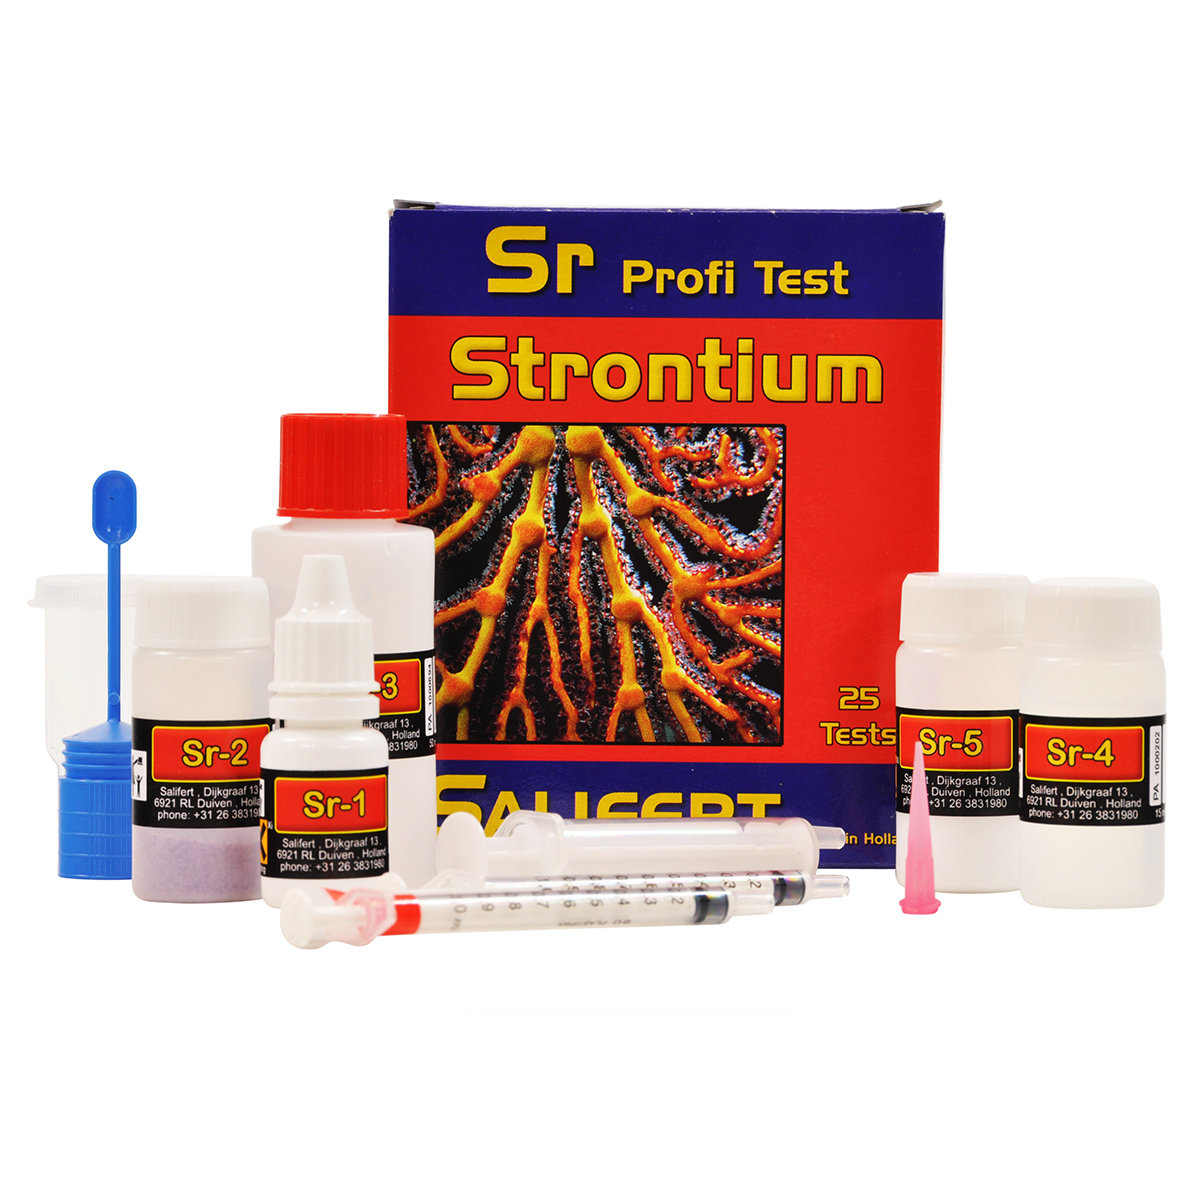 SALIFERT Strontium (Sr) Profi Test